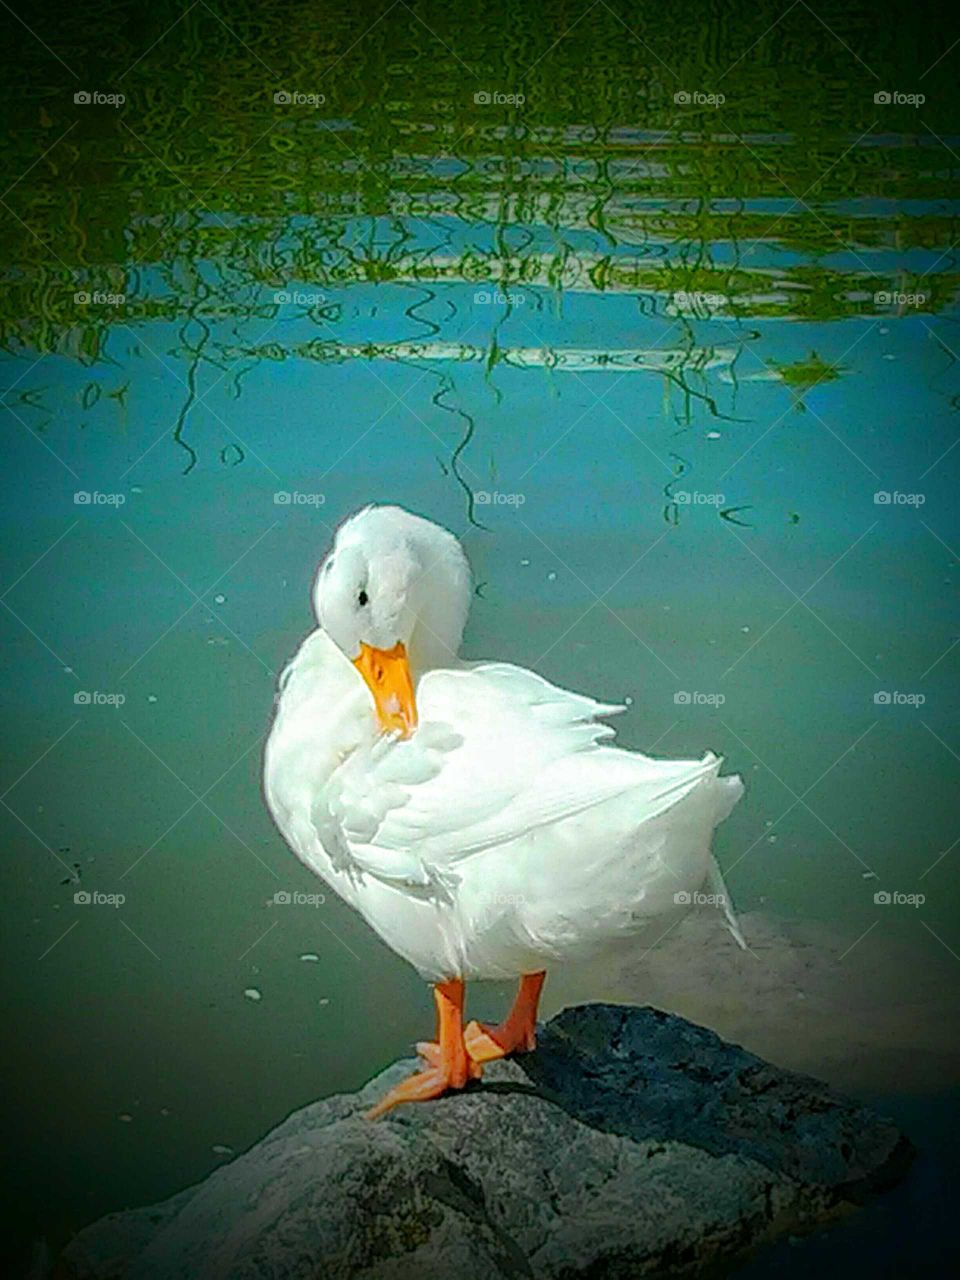 water fowl. it's a picture of a semi aquatic bird